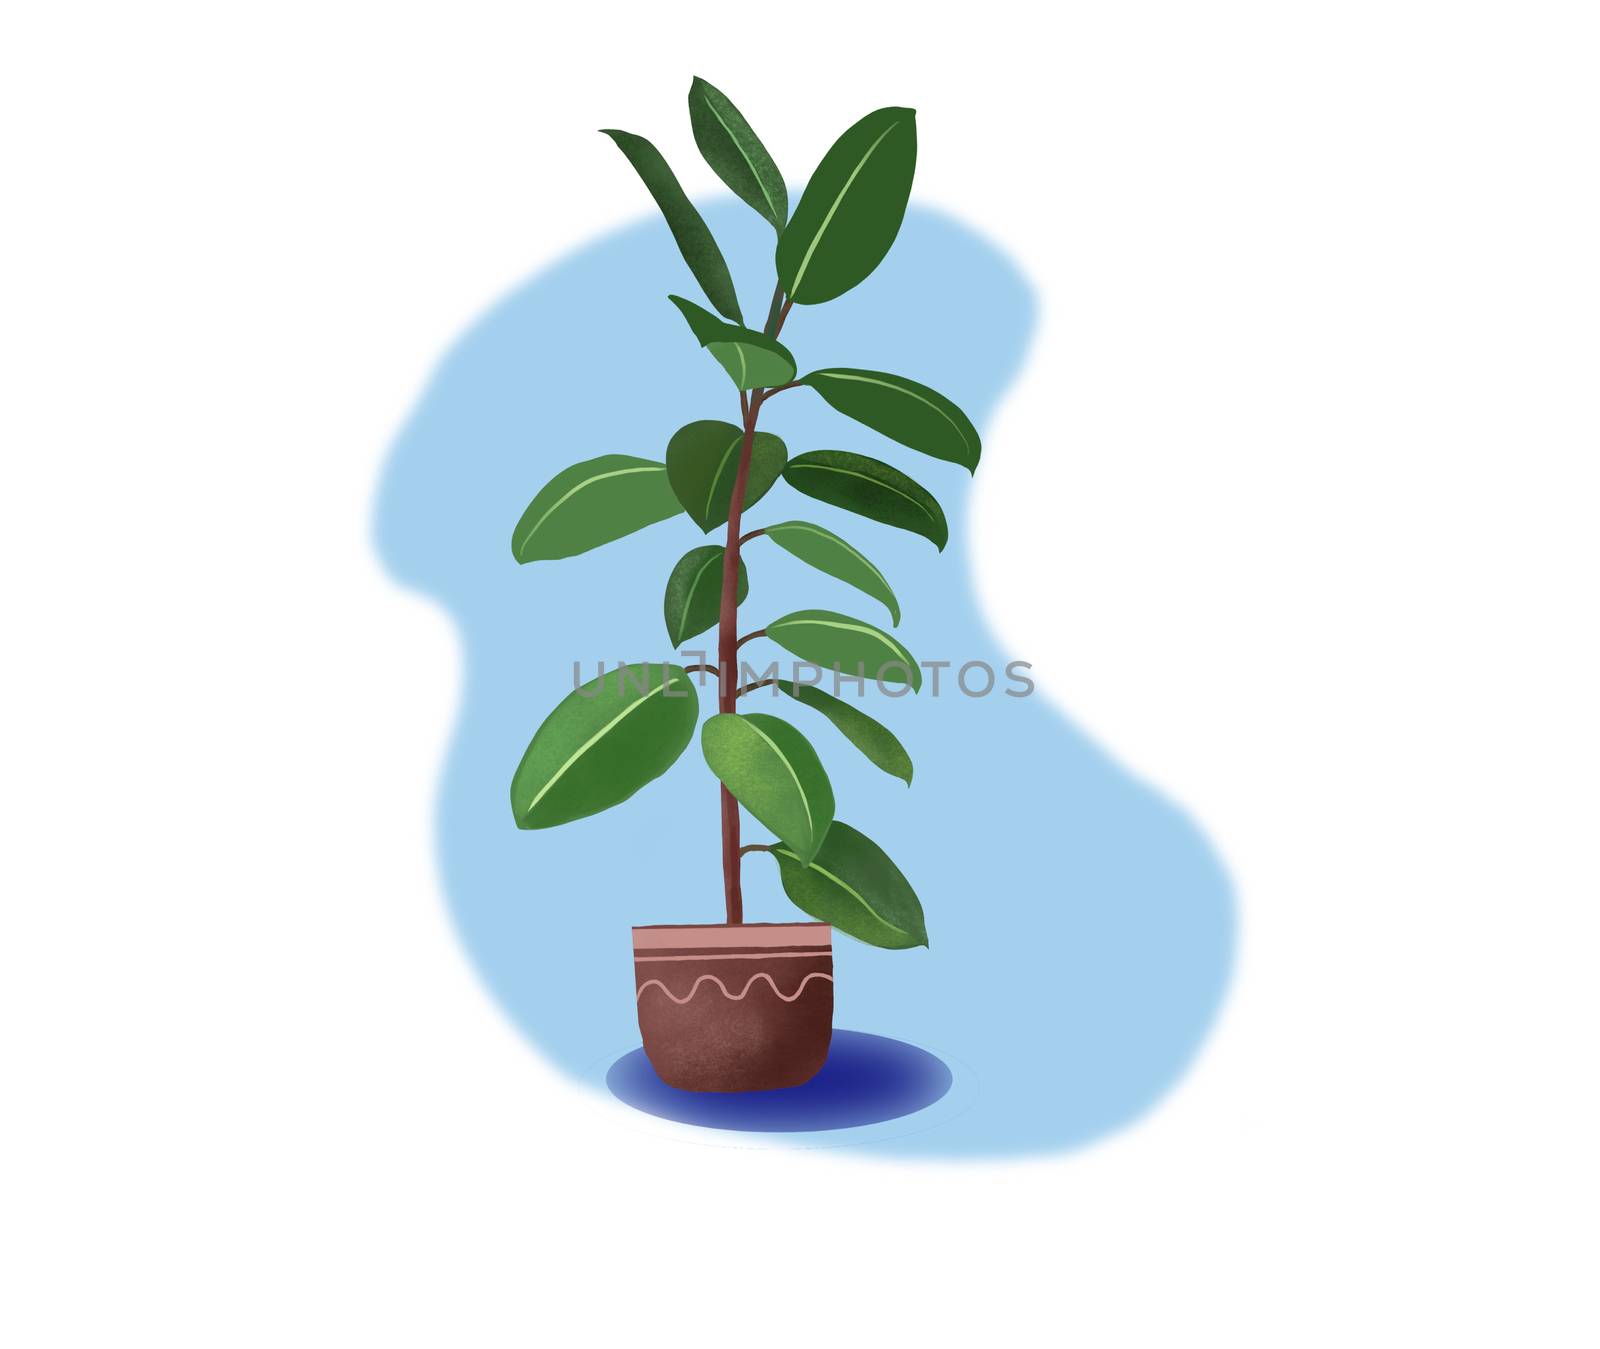 Home plant in pot ficus illustration. Interior design element. Digital hand drawn illustration of rubber plant.